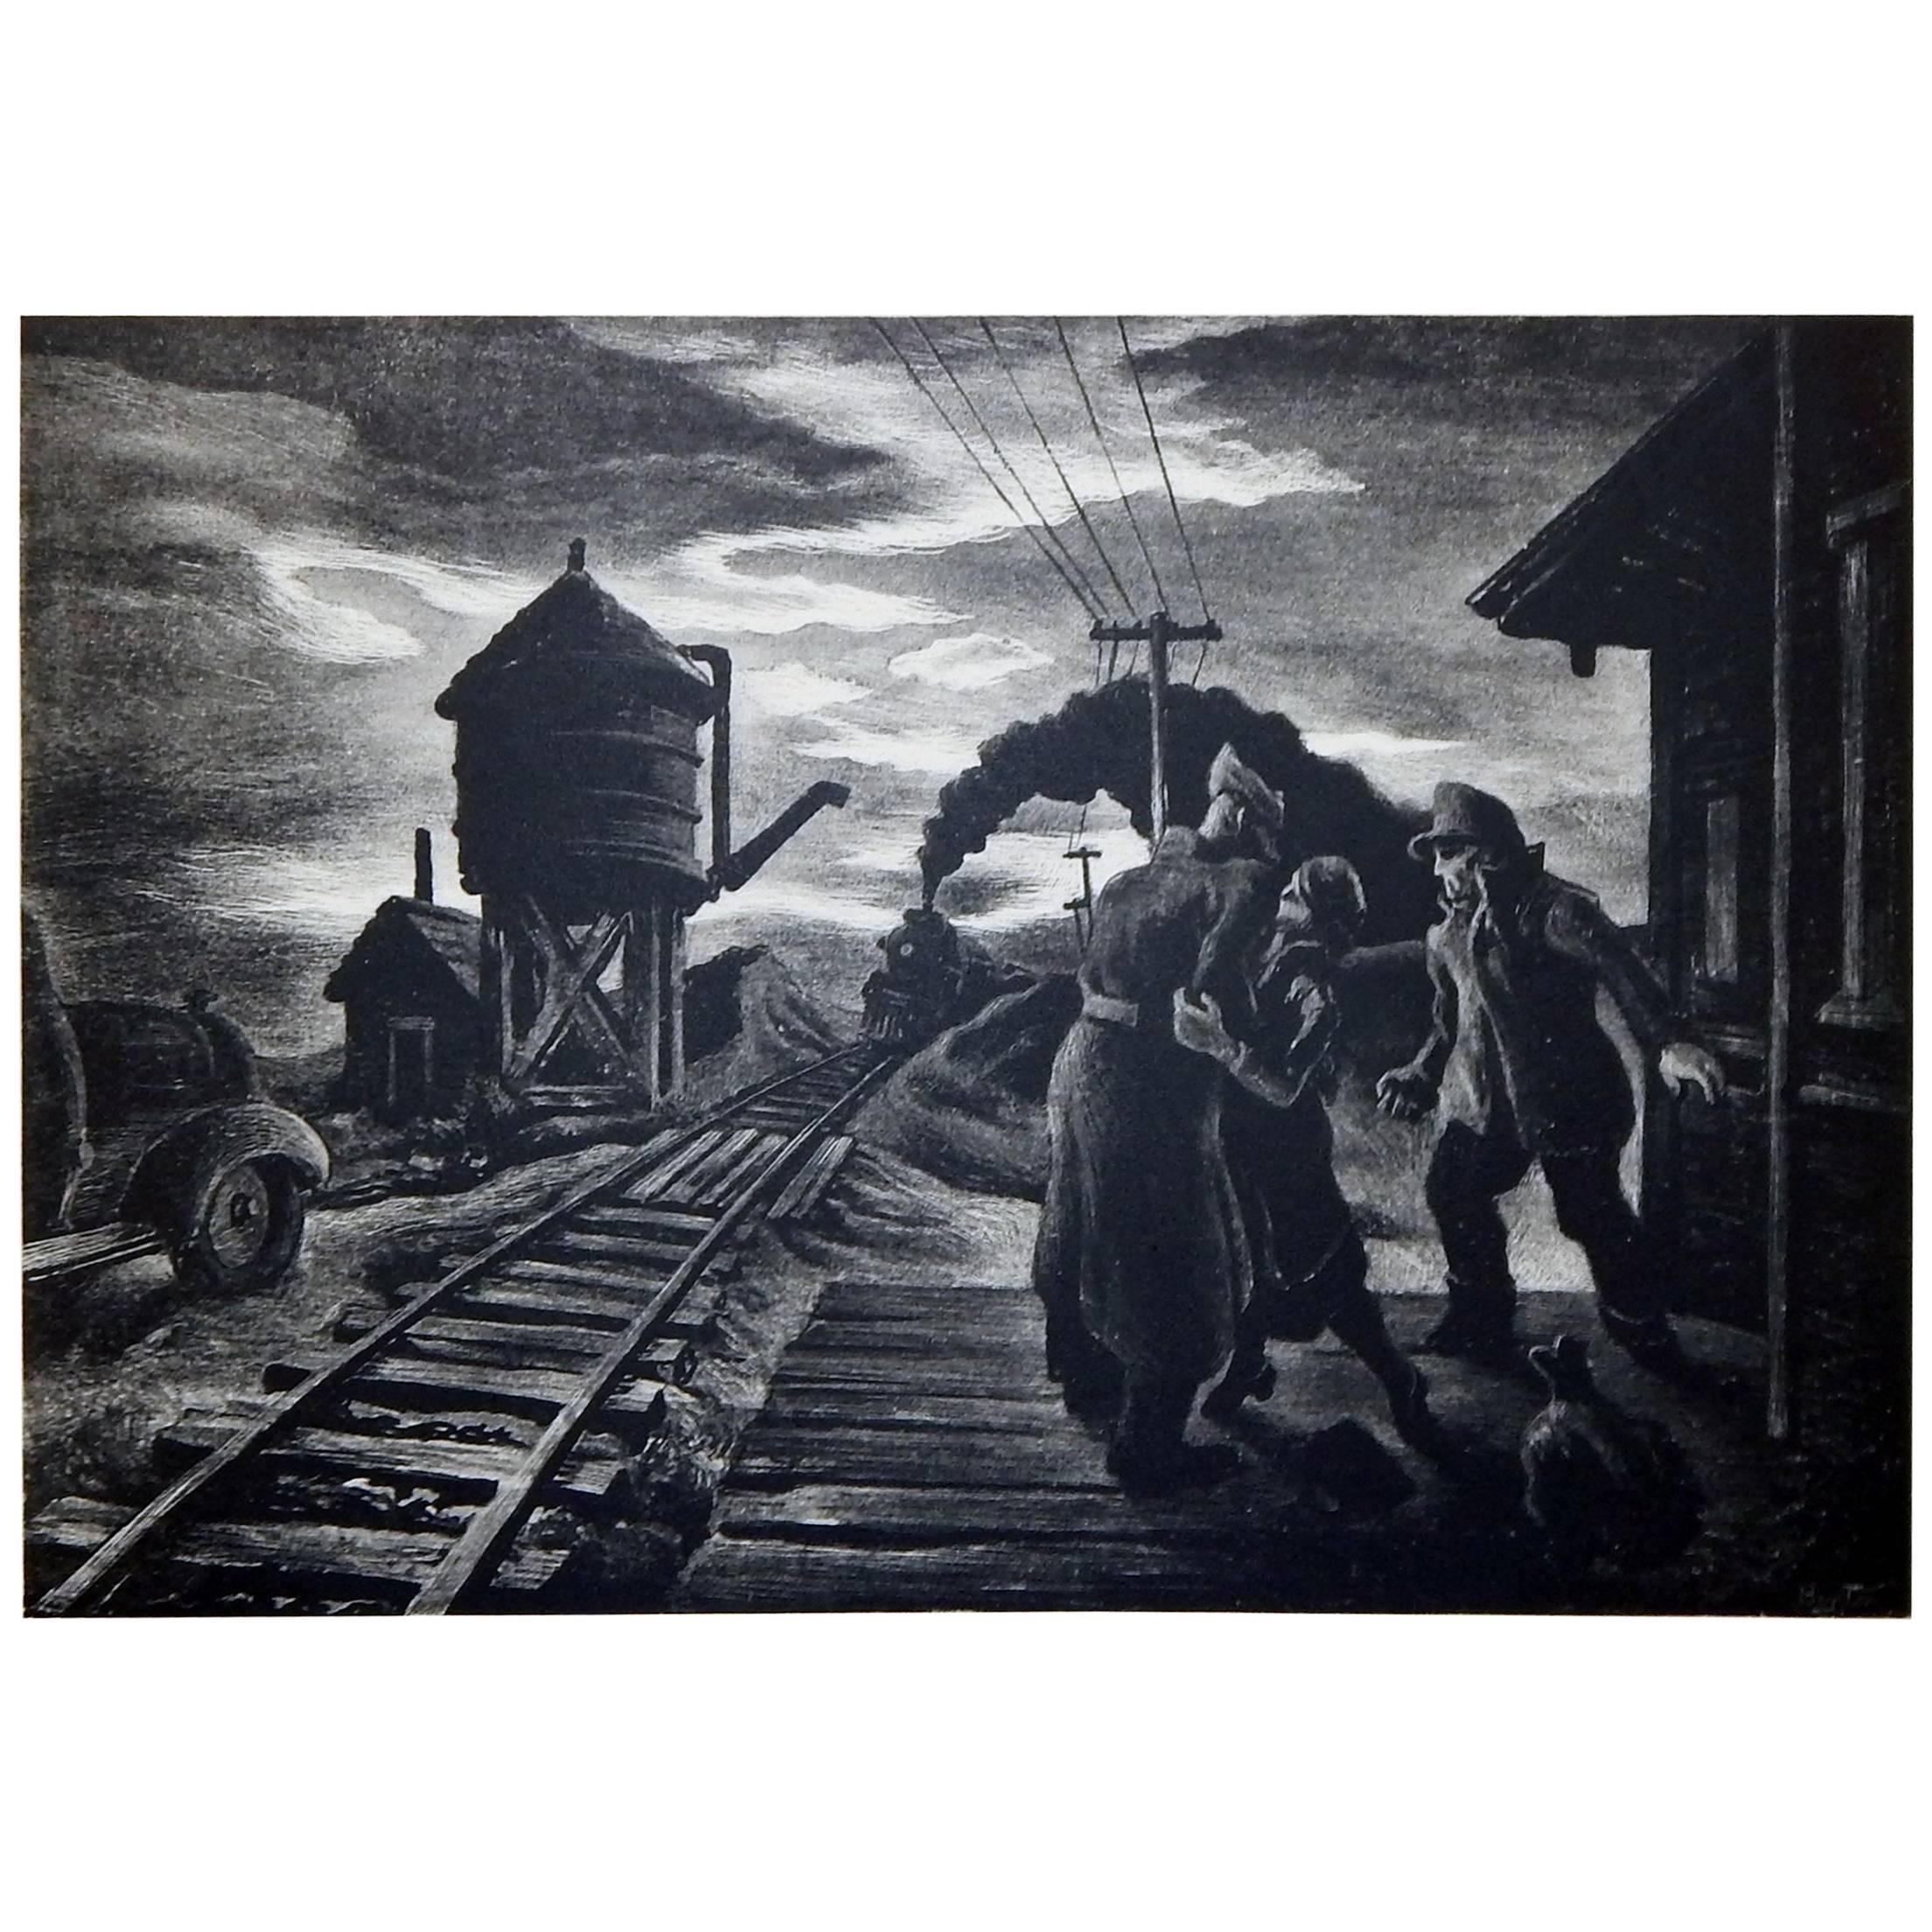 Lithograph "Morning Train" by American Regionalist Thomas Hart Benton